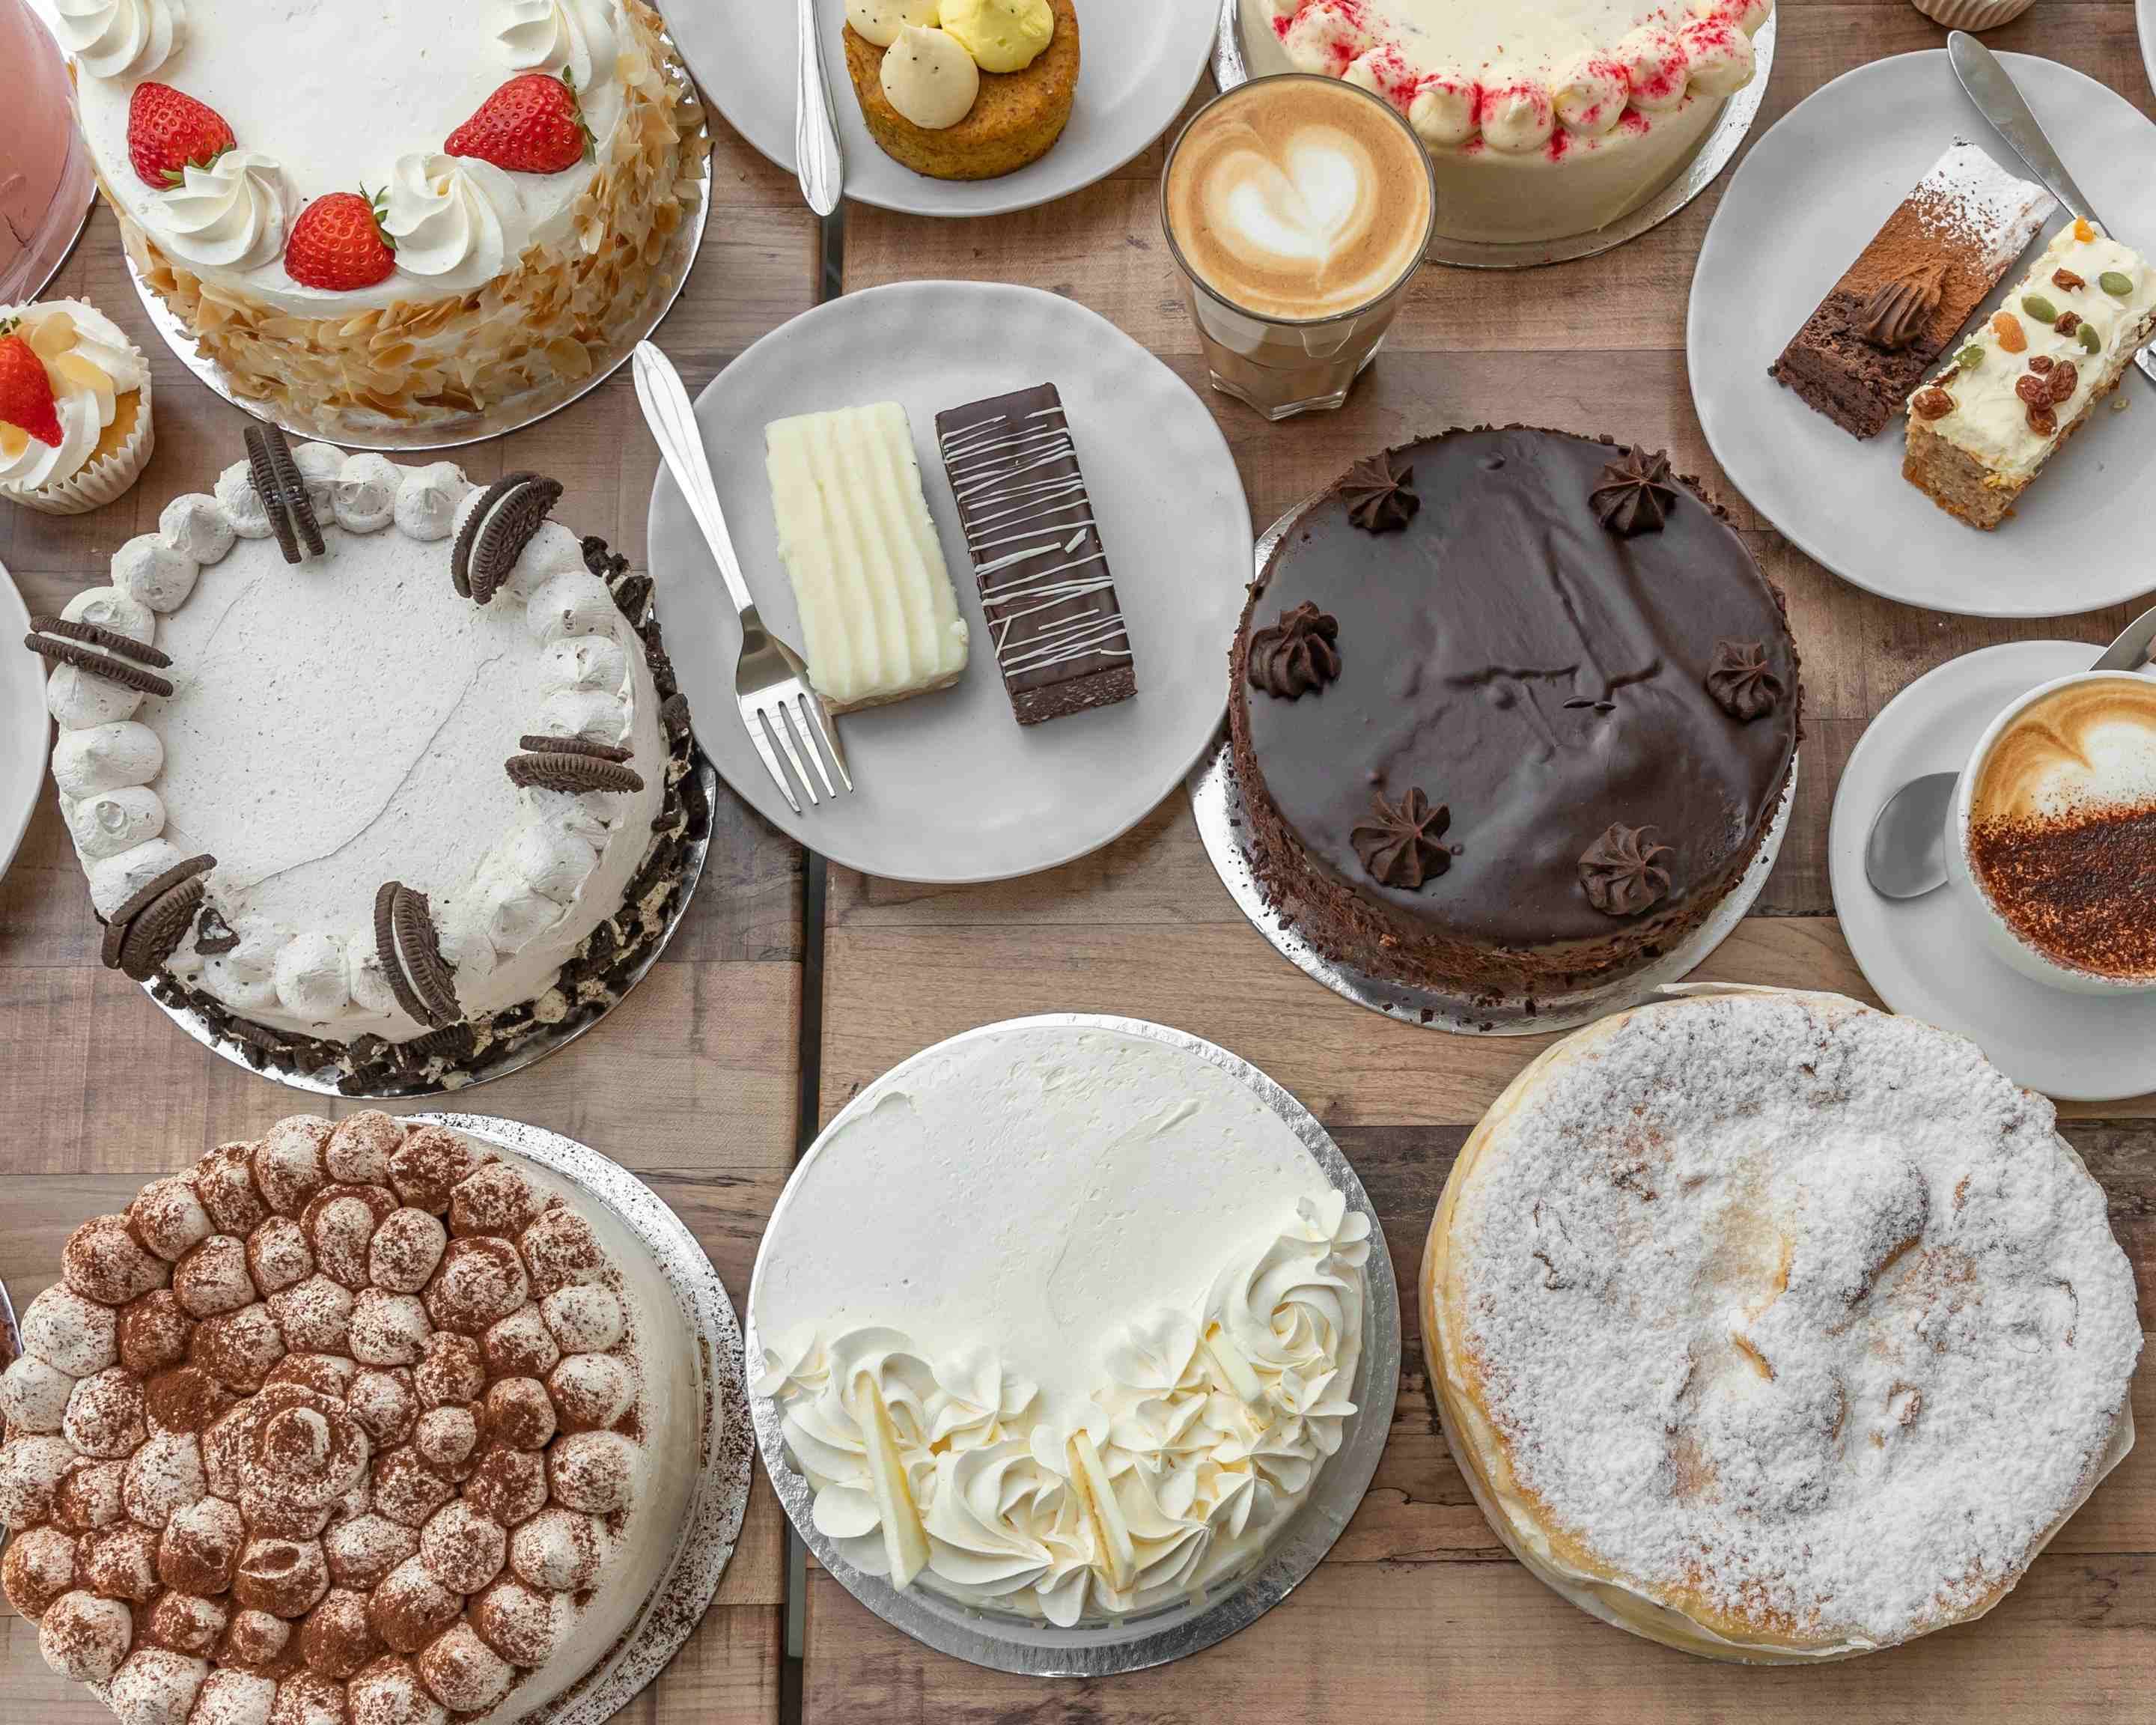 We have a wide variety of cakes that... - Cafe de la Presse | Facebook